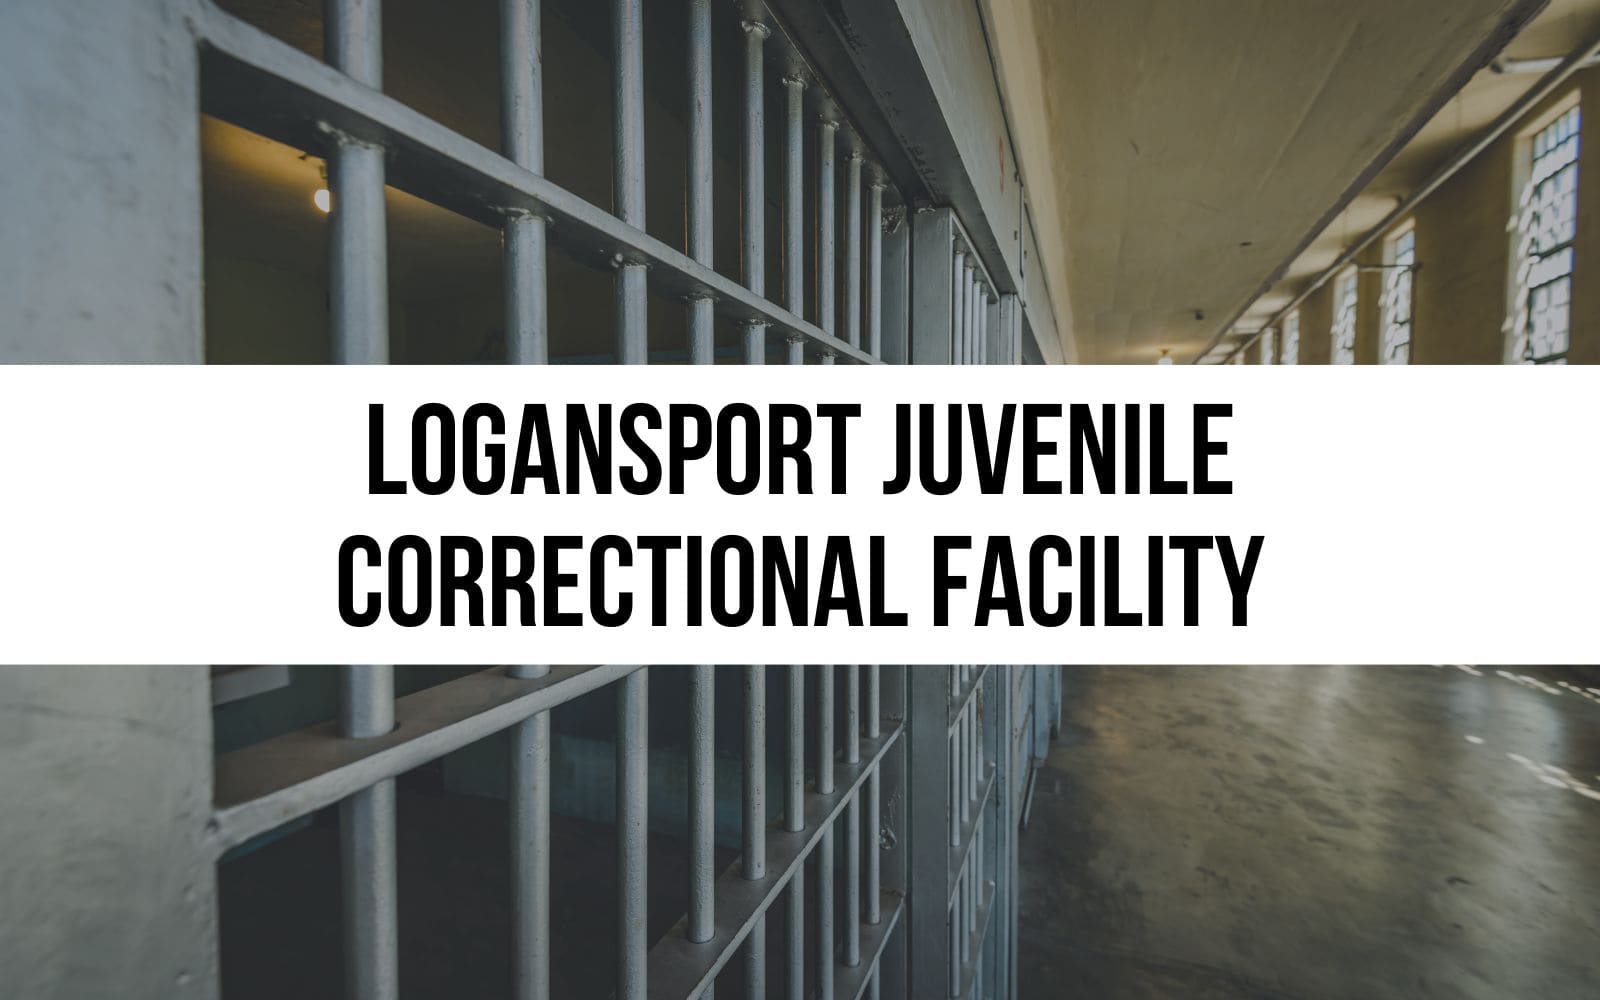 Logansport Juvenile Correctional Facility